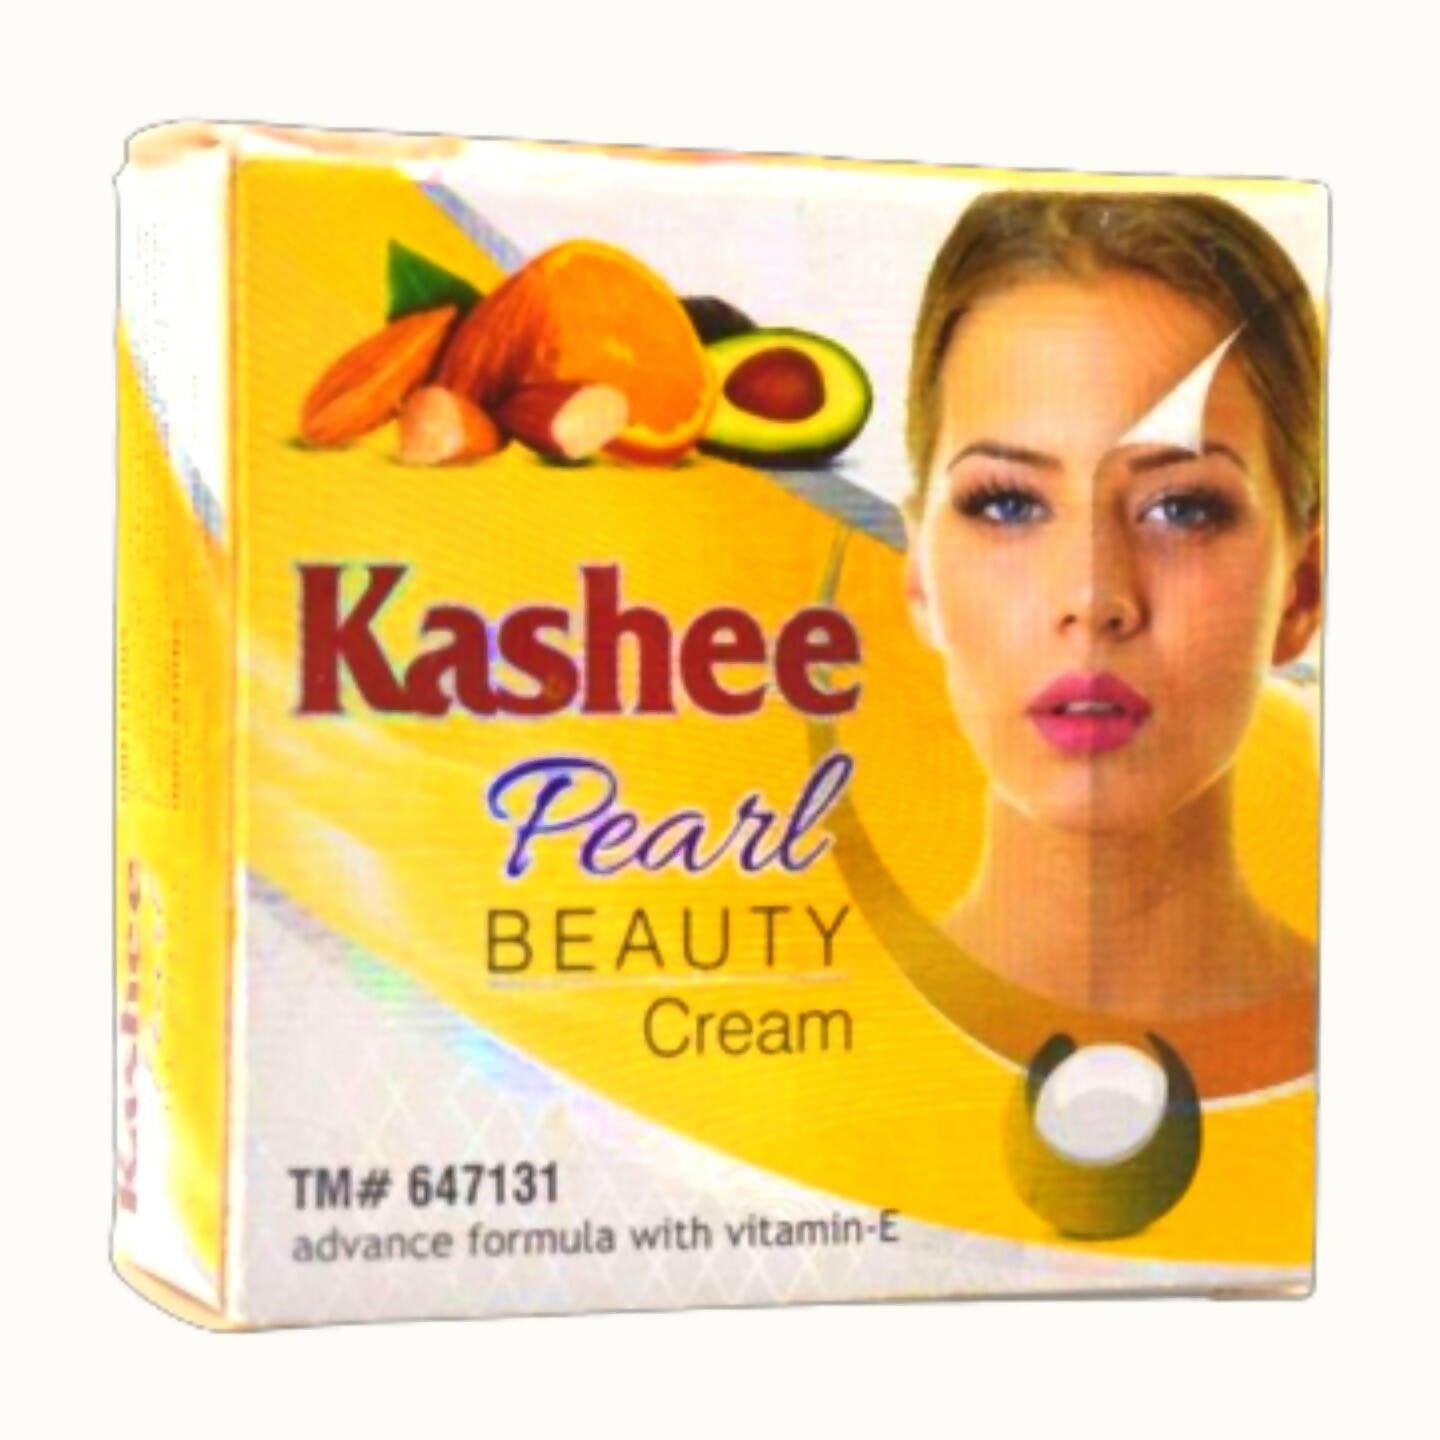 Kashee Pearl 7 Day Beauty Cream